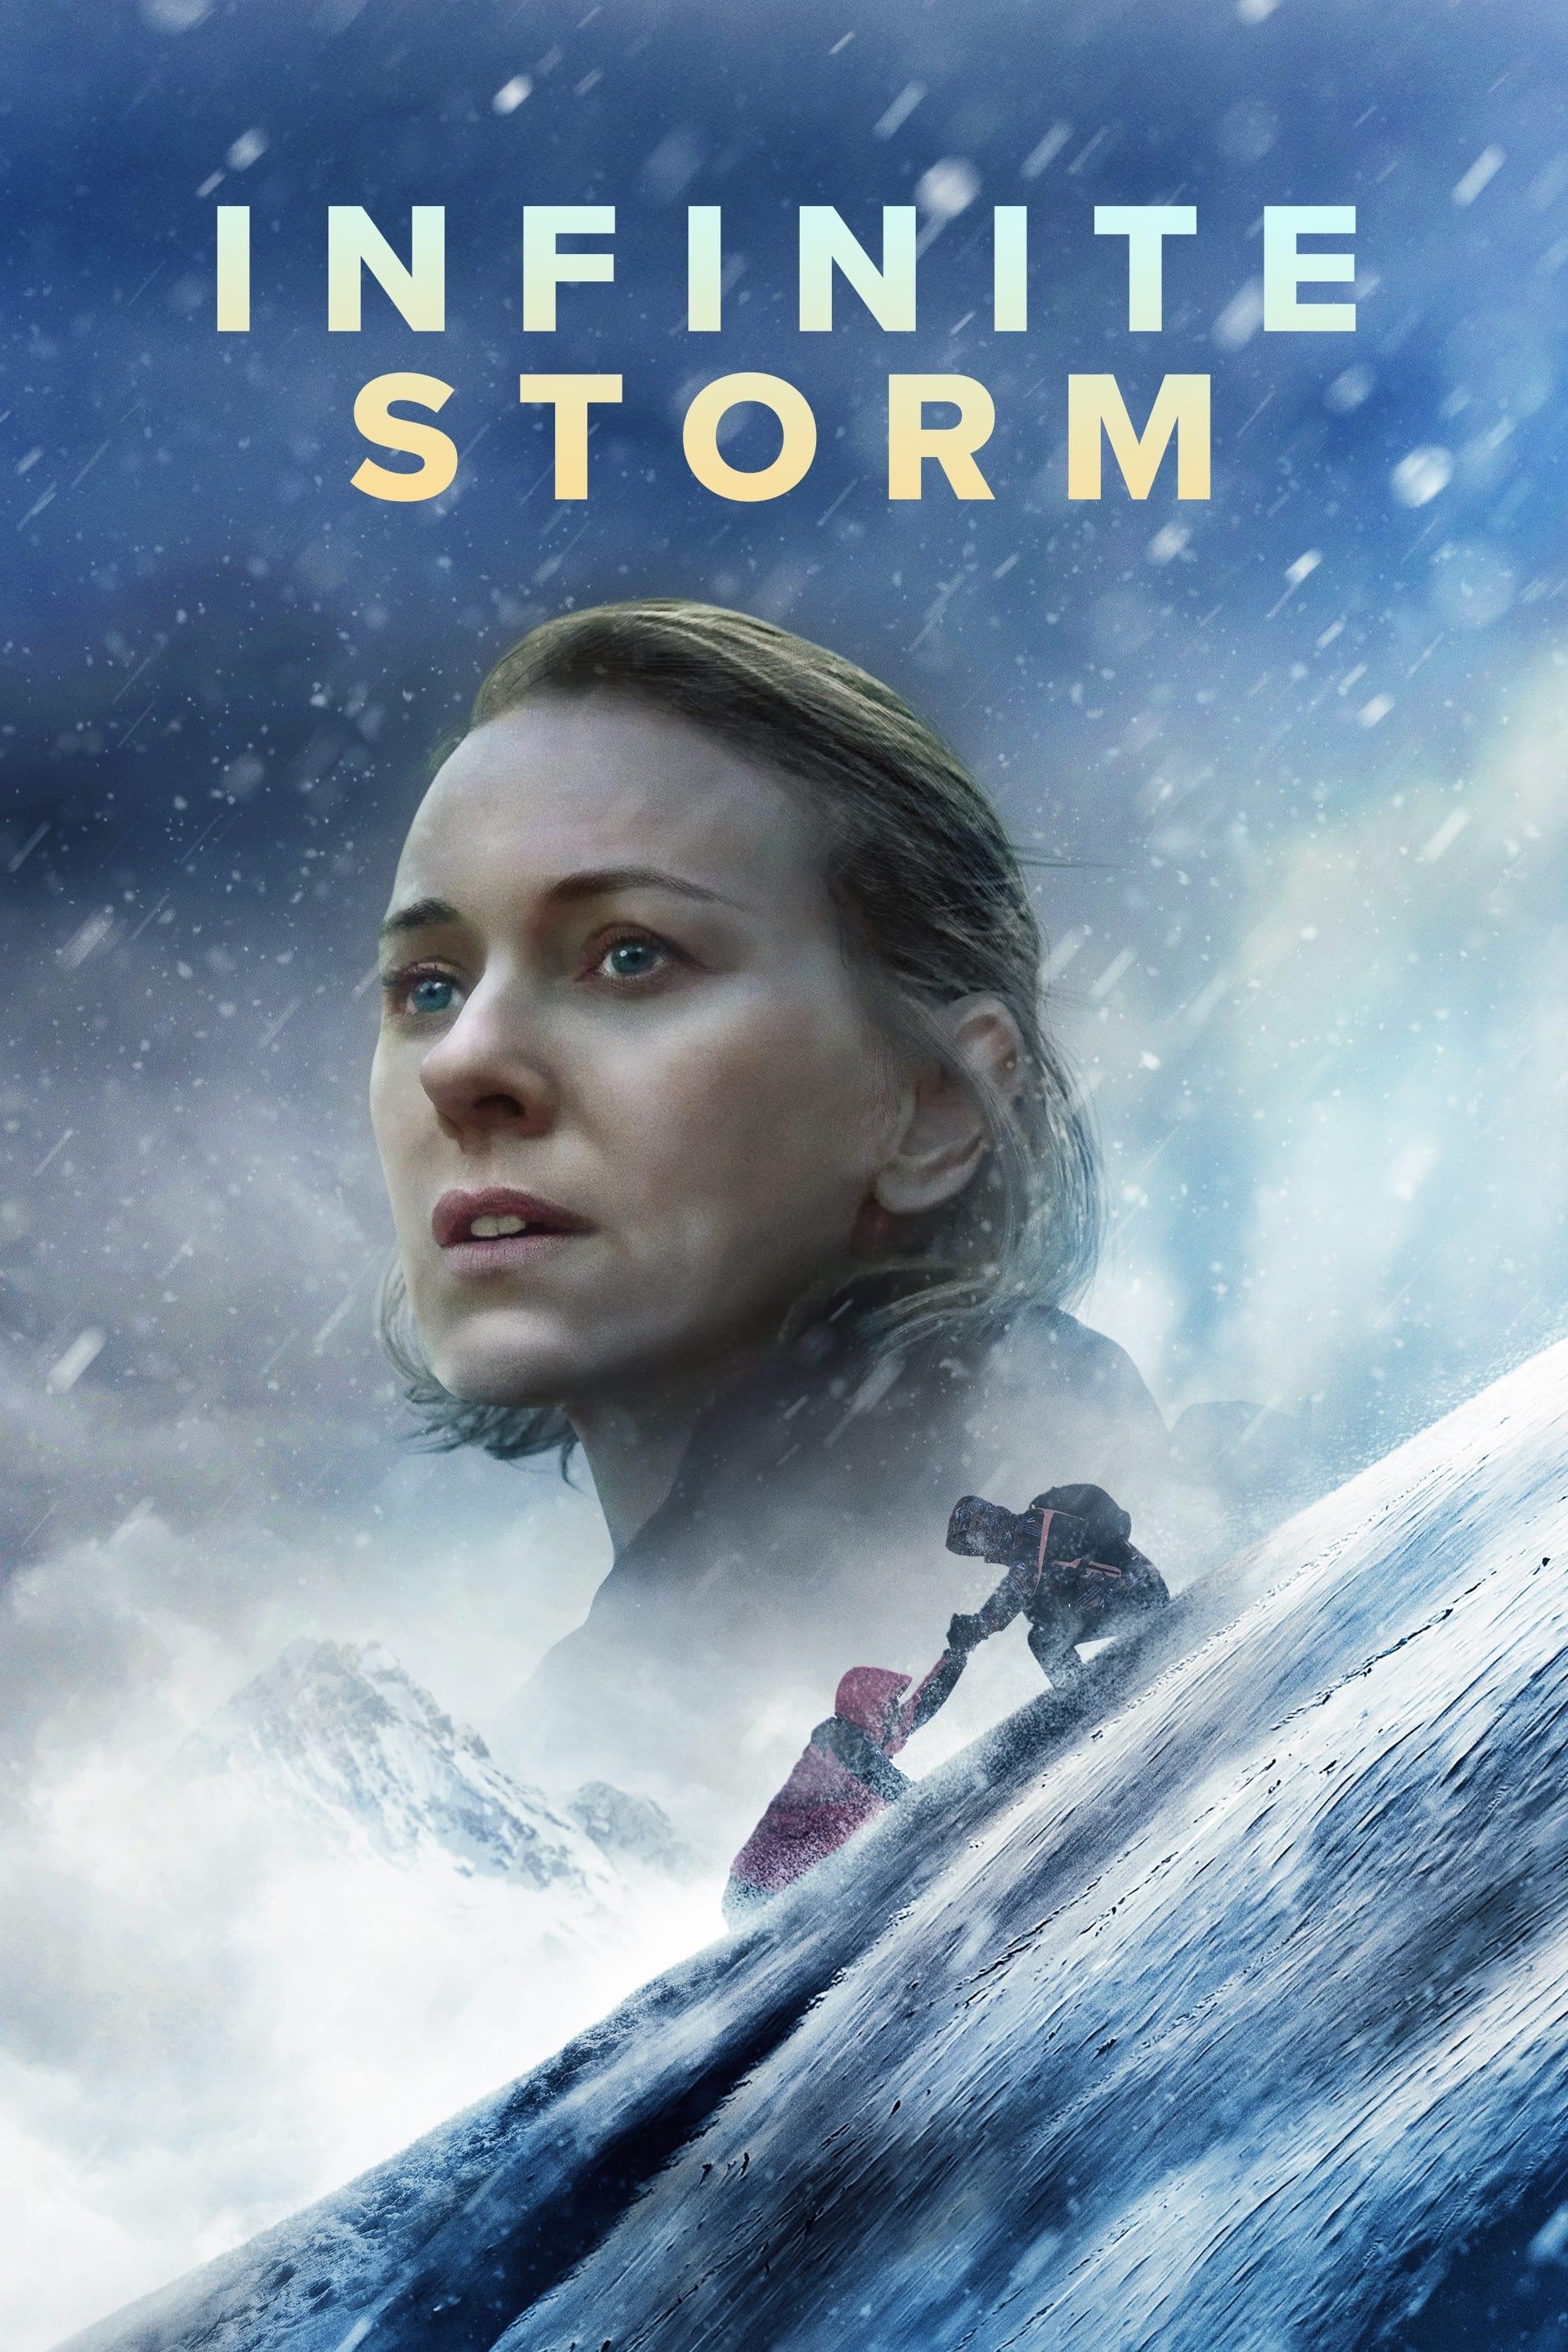 Infinite Storm poster